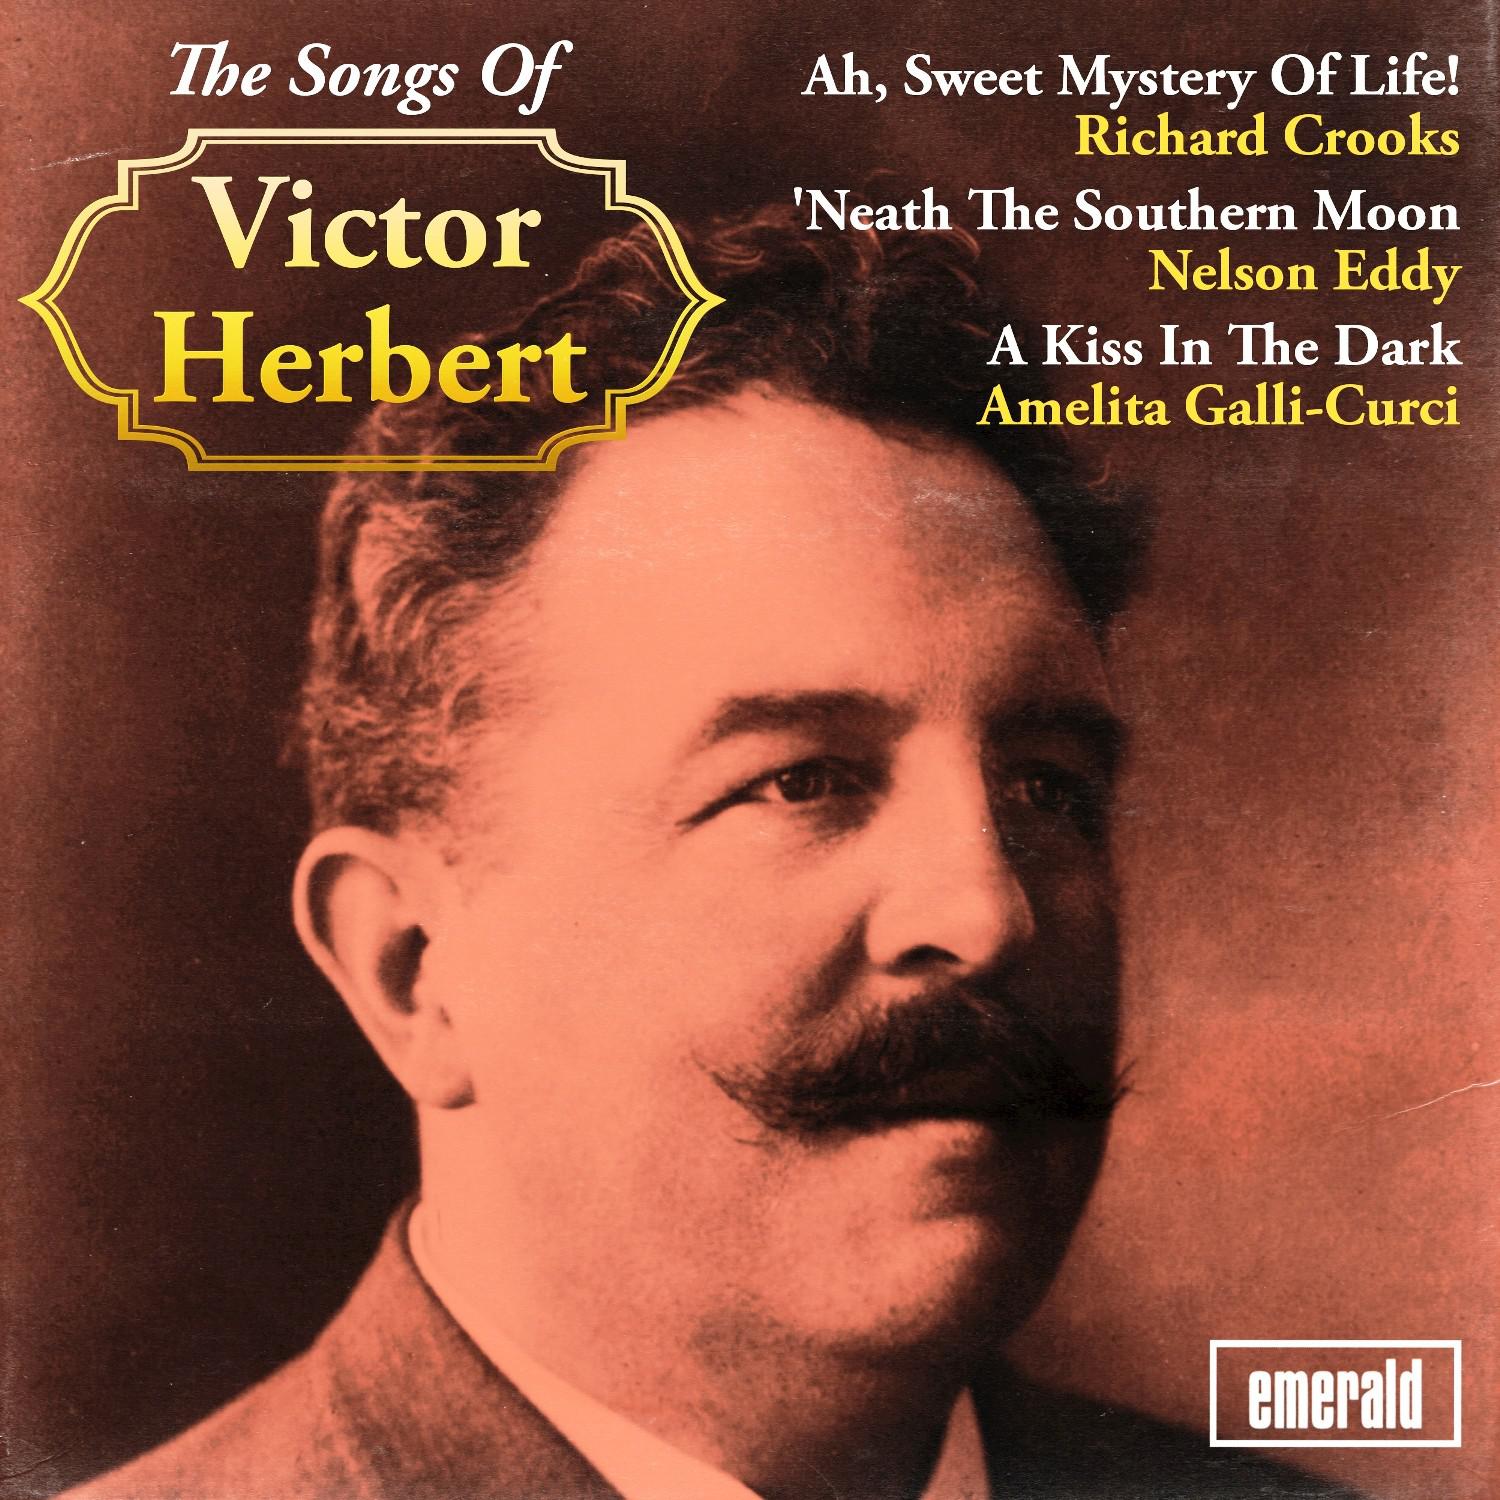 The Songs of Victor Herbert